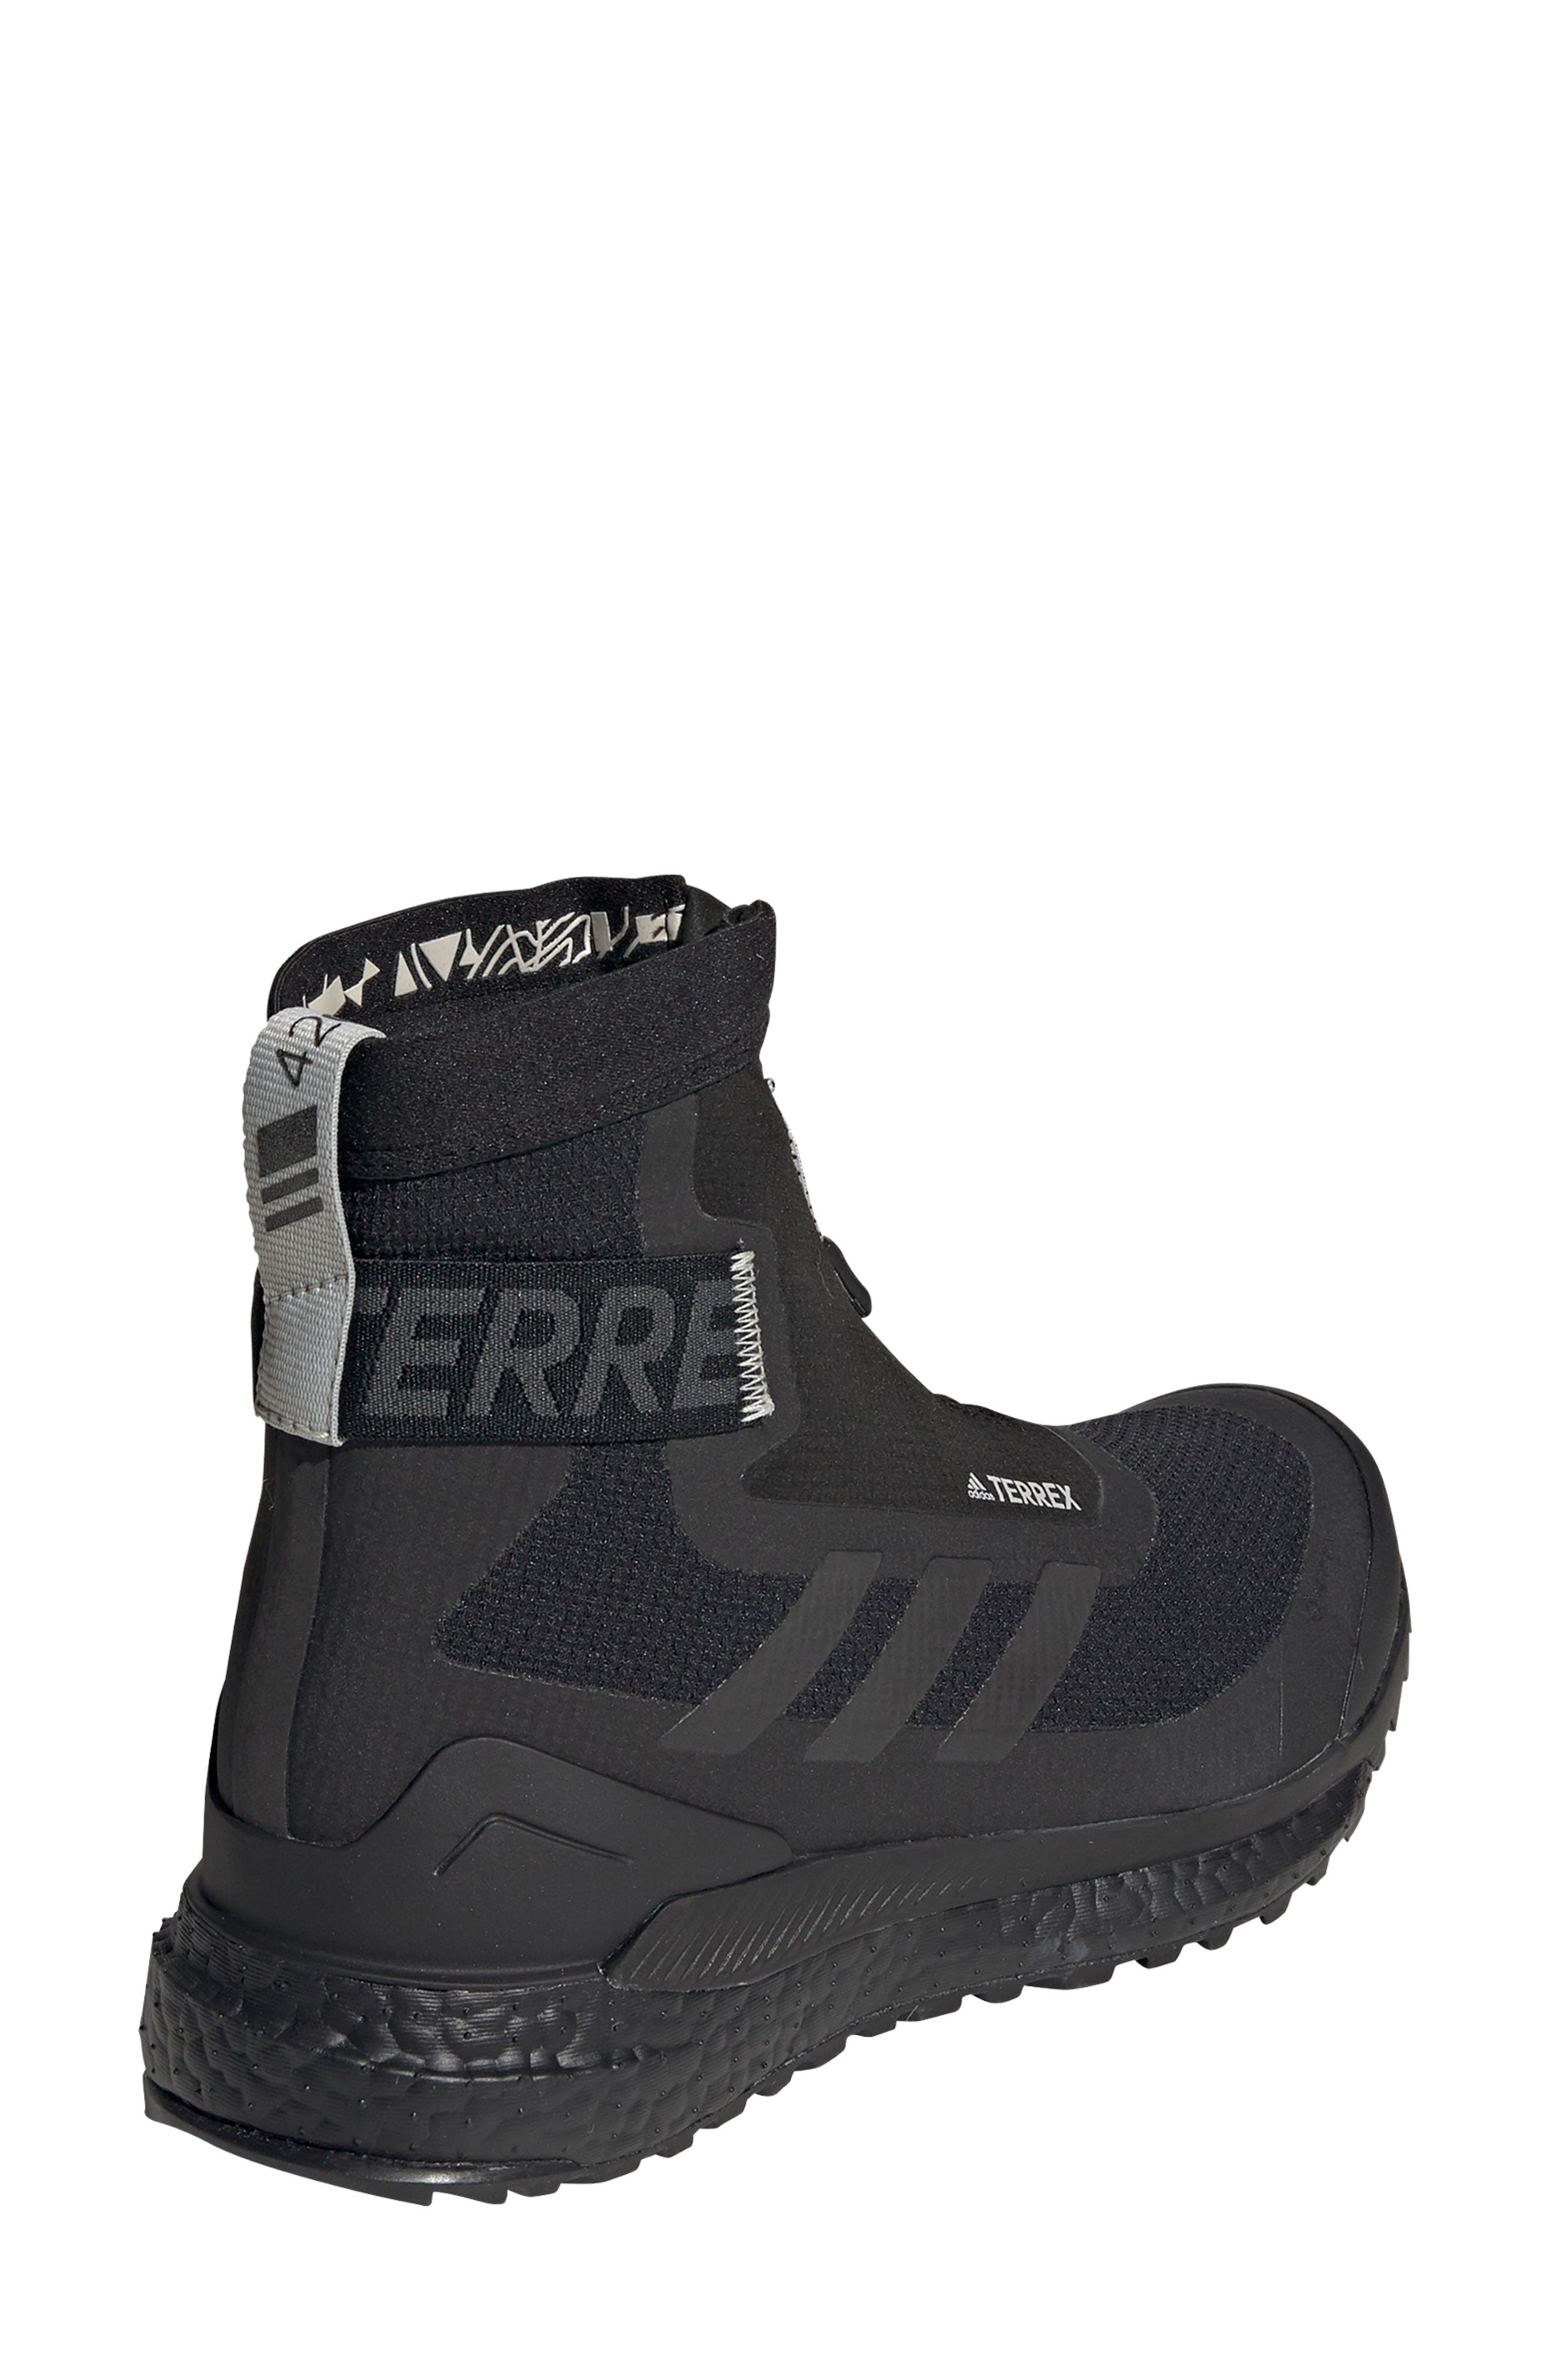 adidas waterproof hiking boots